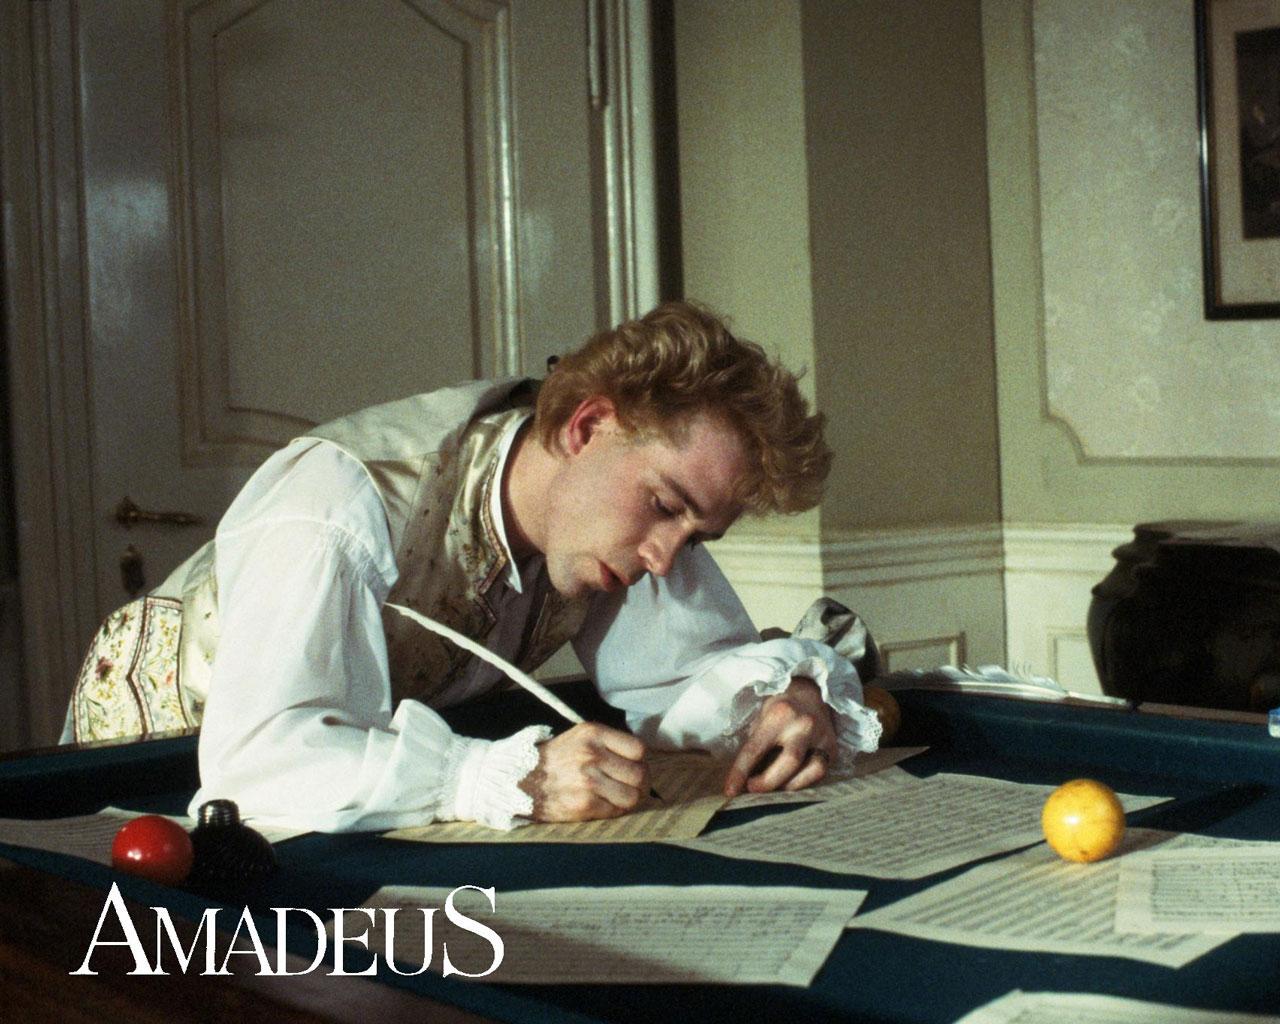 Amadeus Wallpaper #1 1280 x 1024 